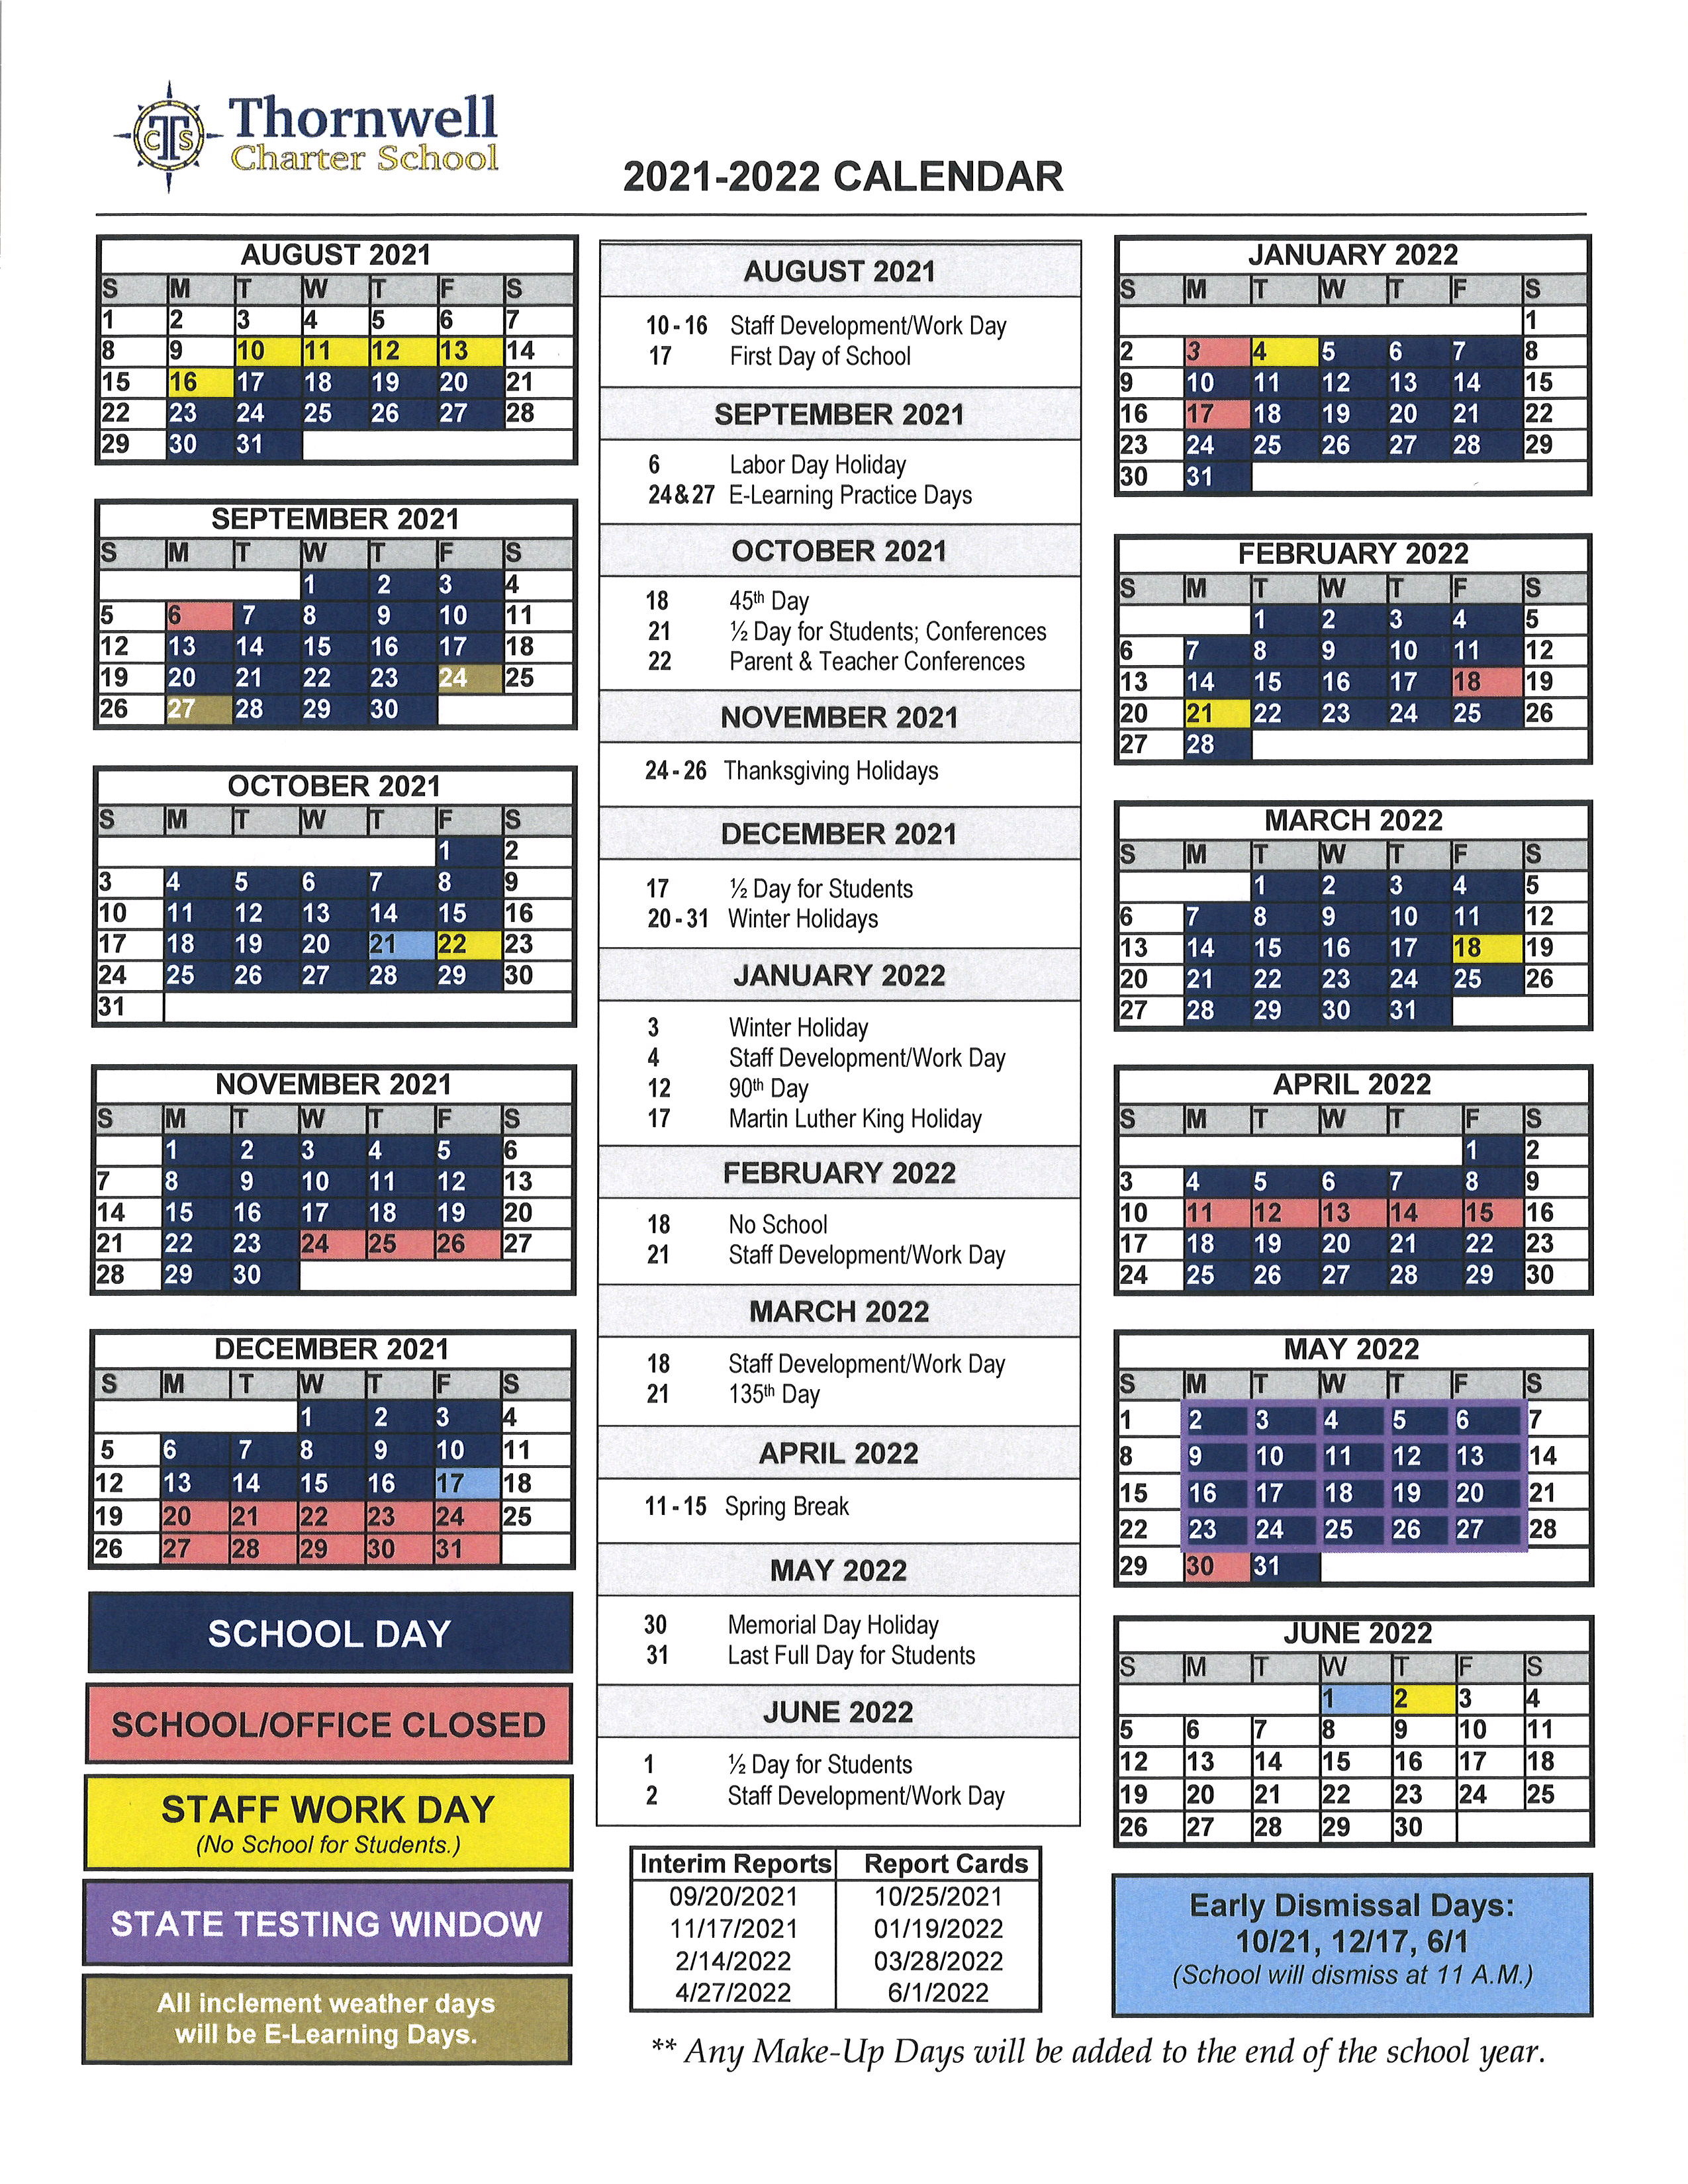 school-calendars-thornwell-charter-school